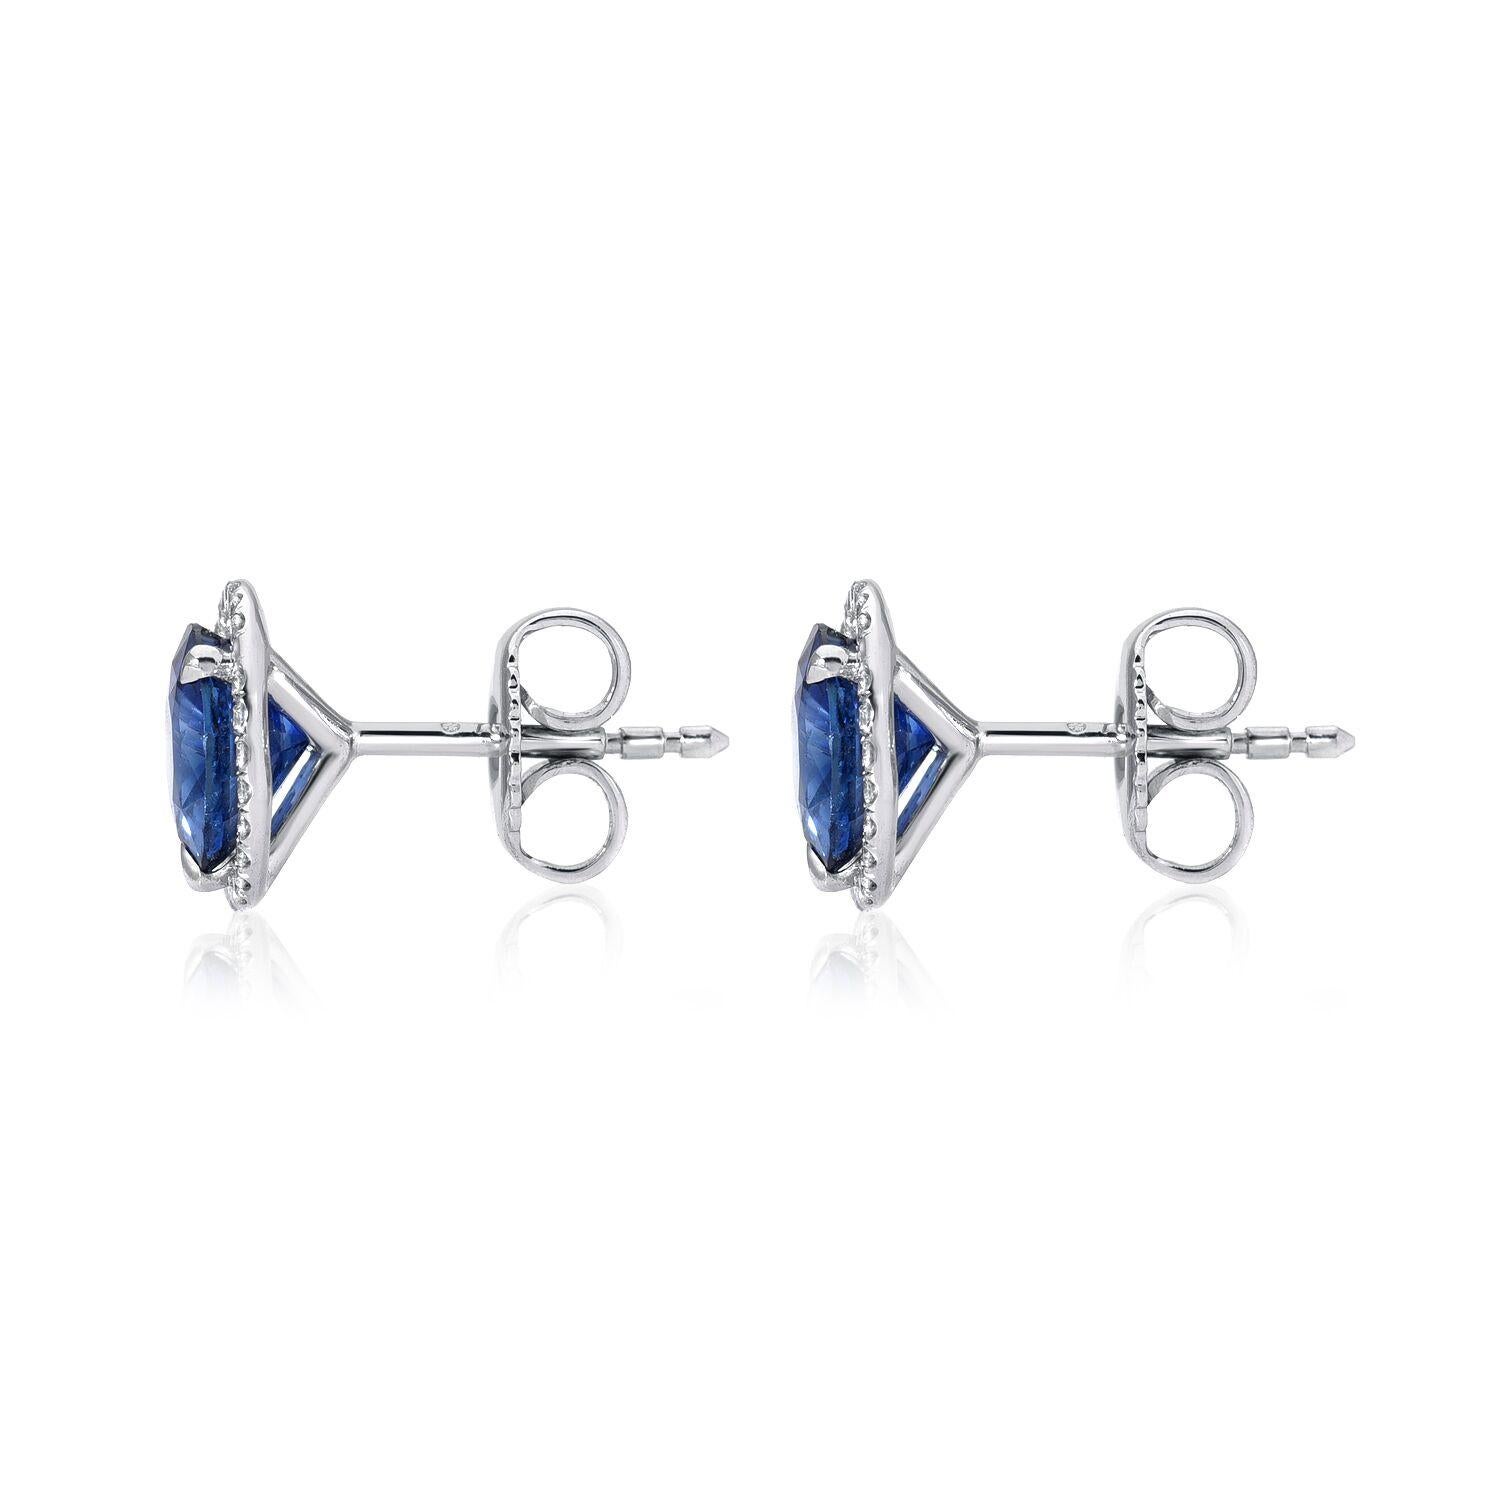 Round Cut Sapphire Diamond Stud Earrings 2.19 Carat